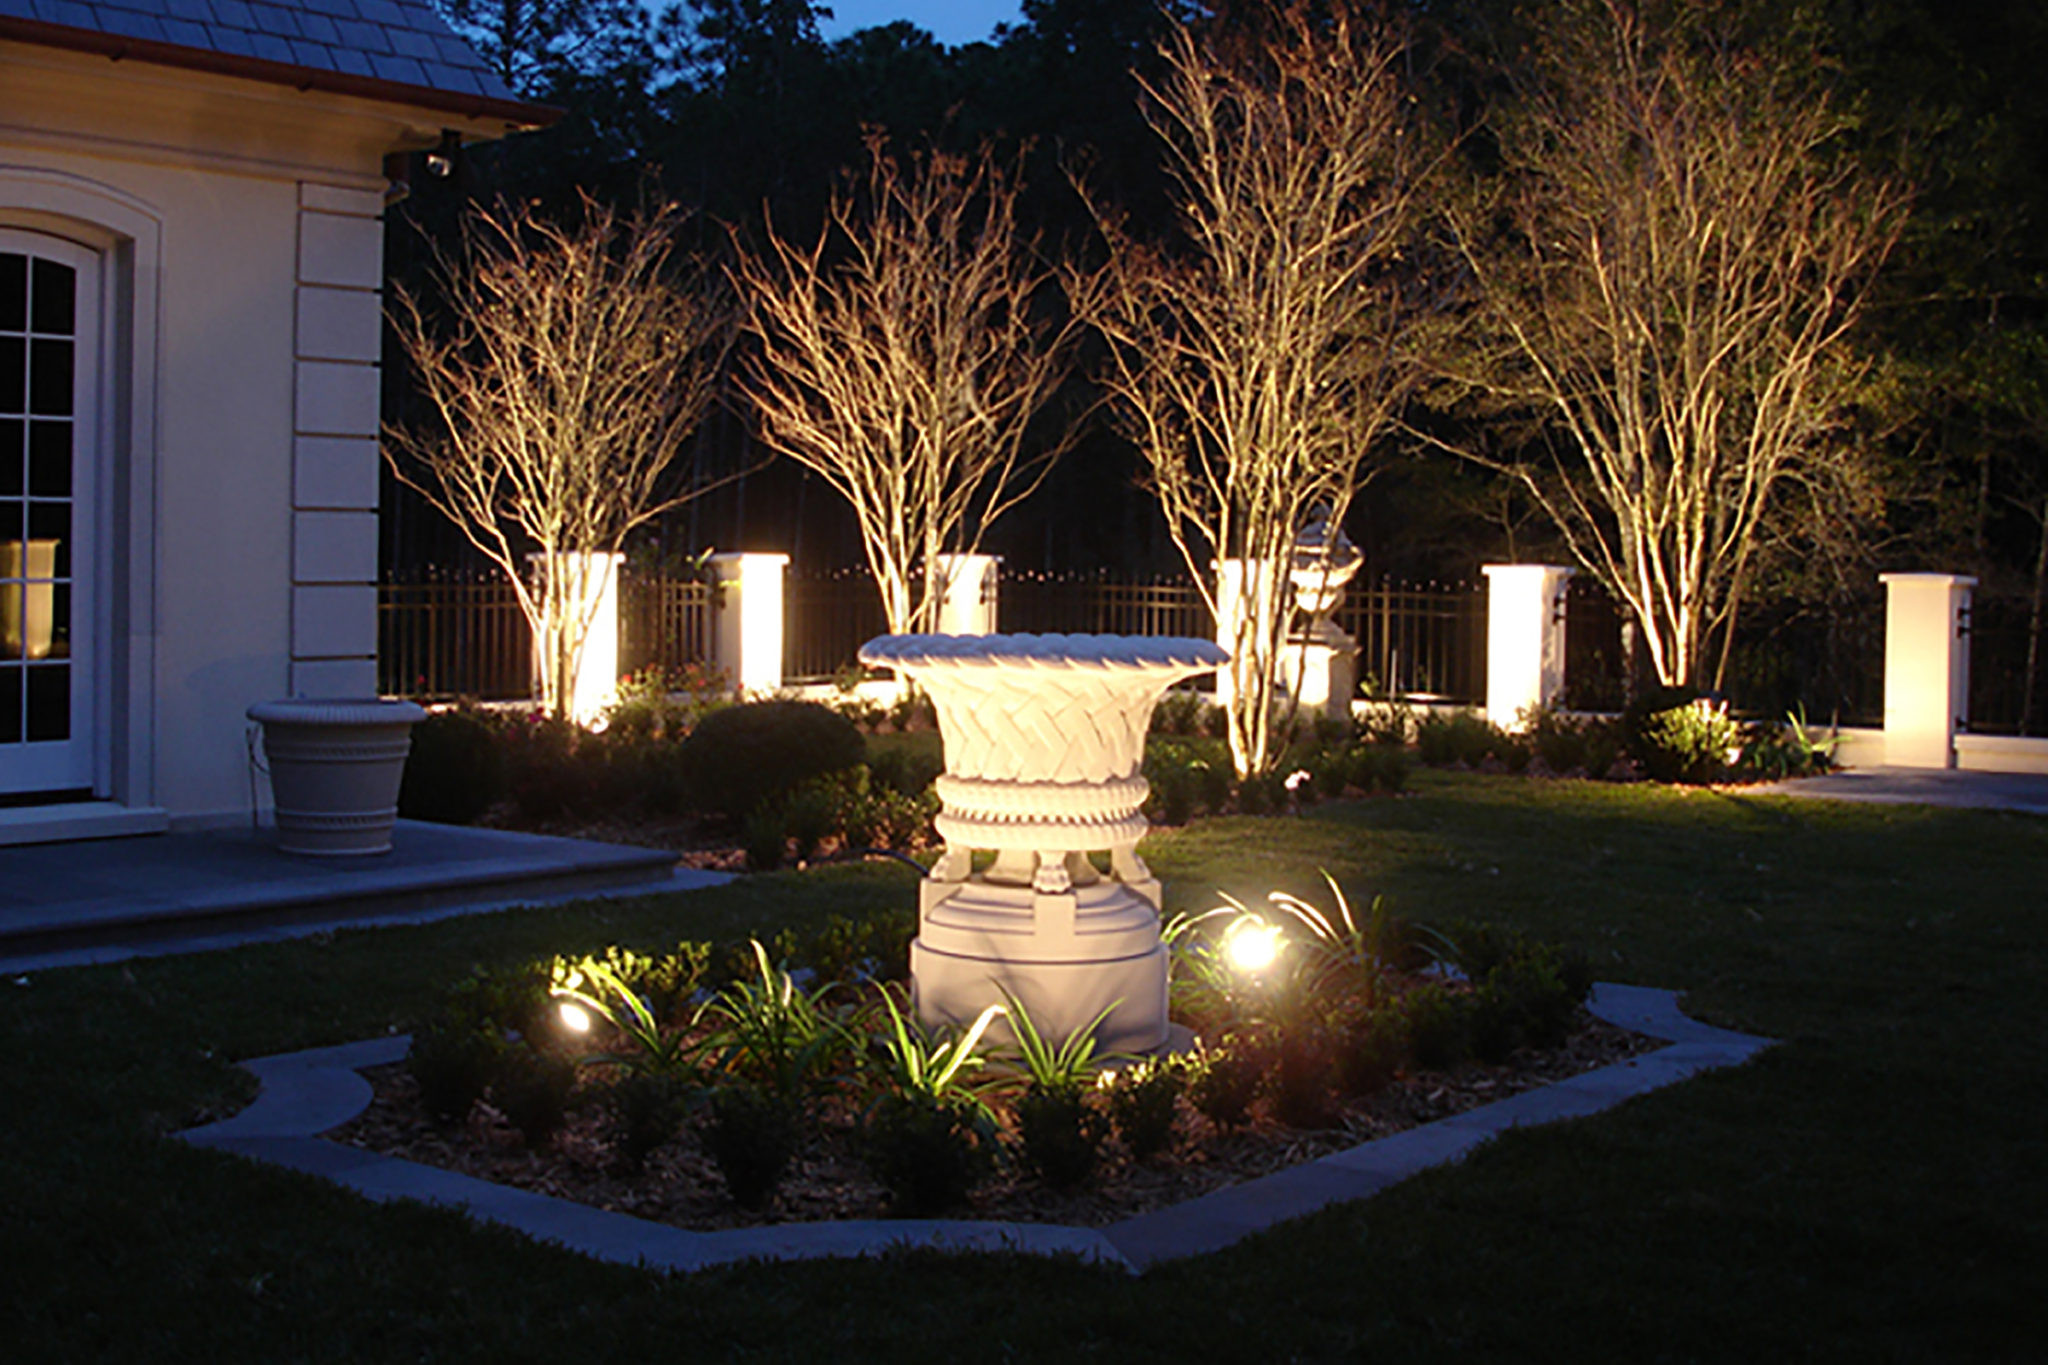 Best ideas about Led Landscape Lighting
. Save or Pin Landscape Lighting Design & Installation St Louis Now.